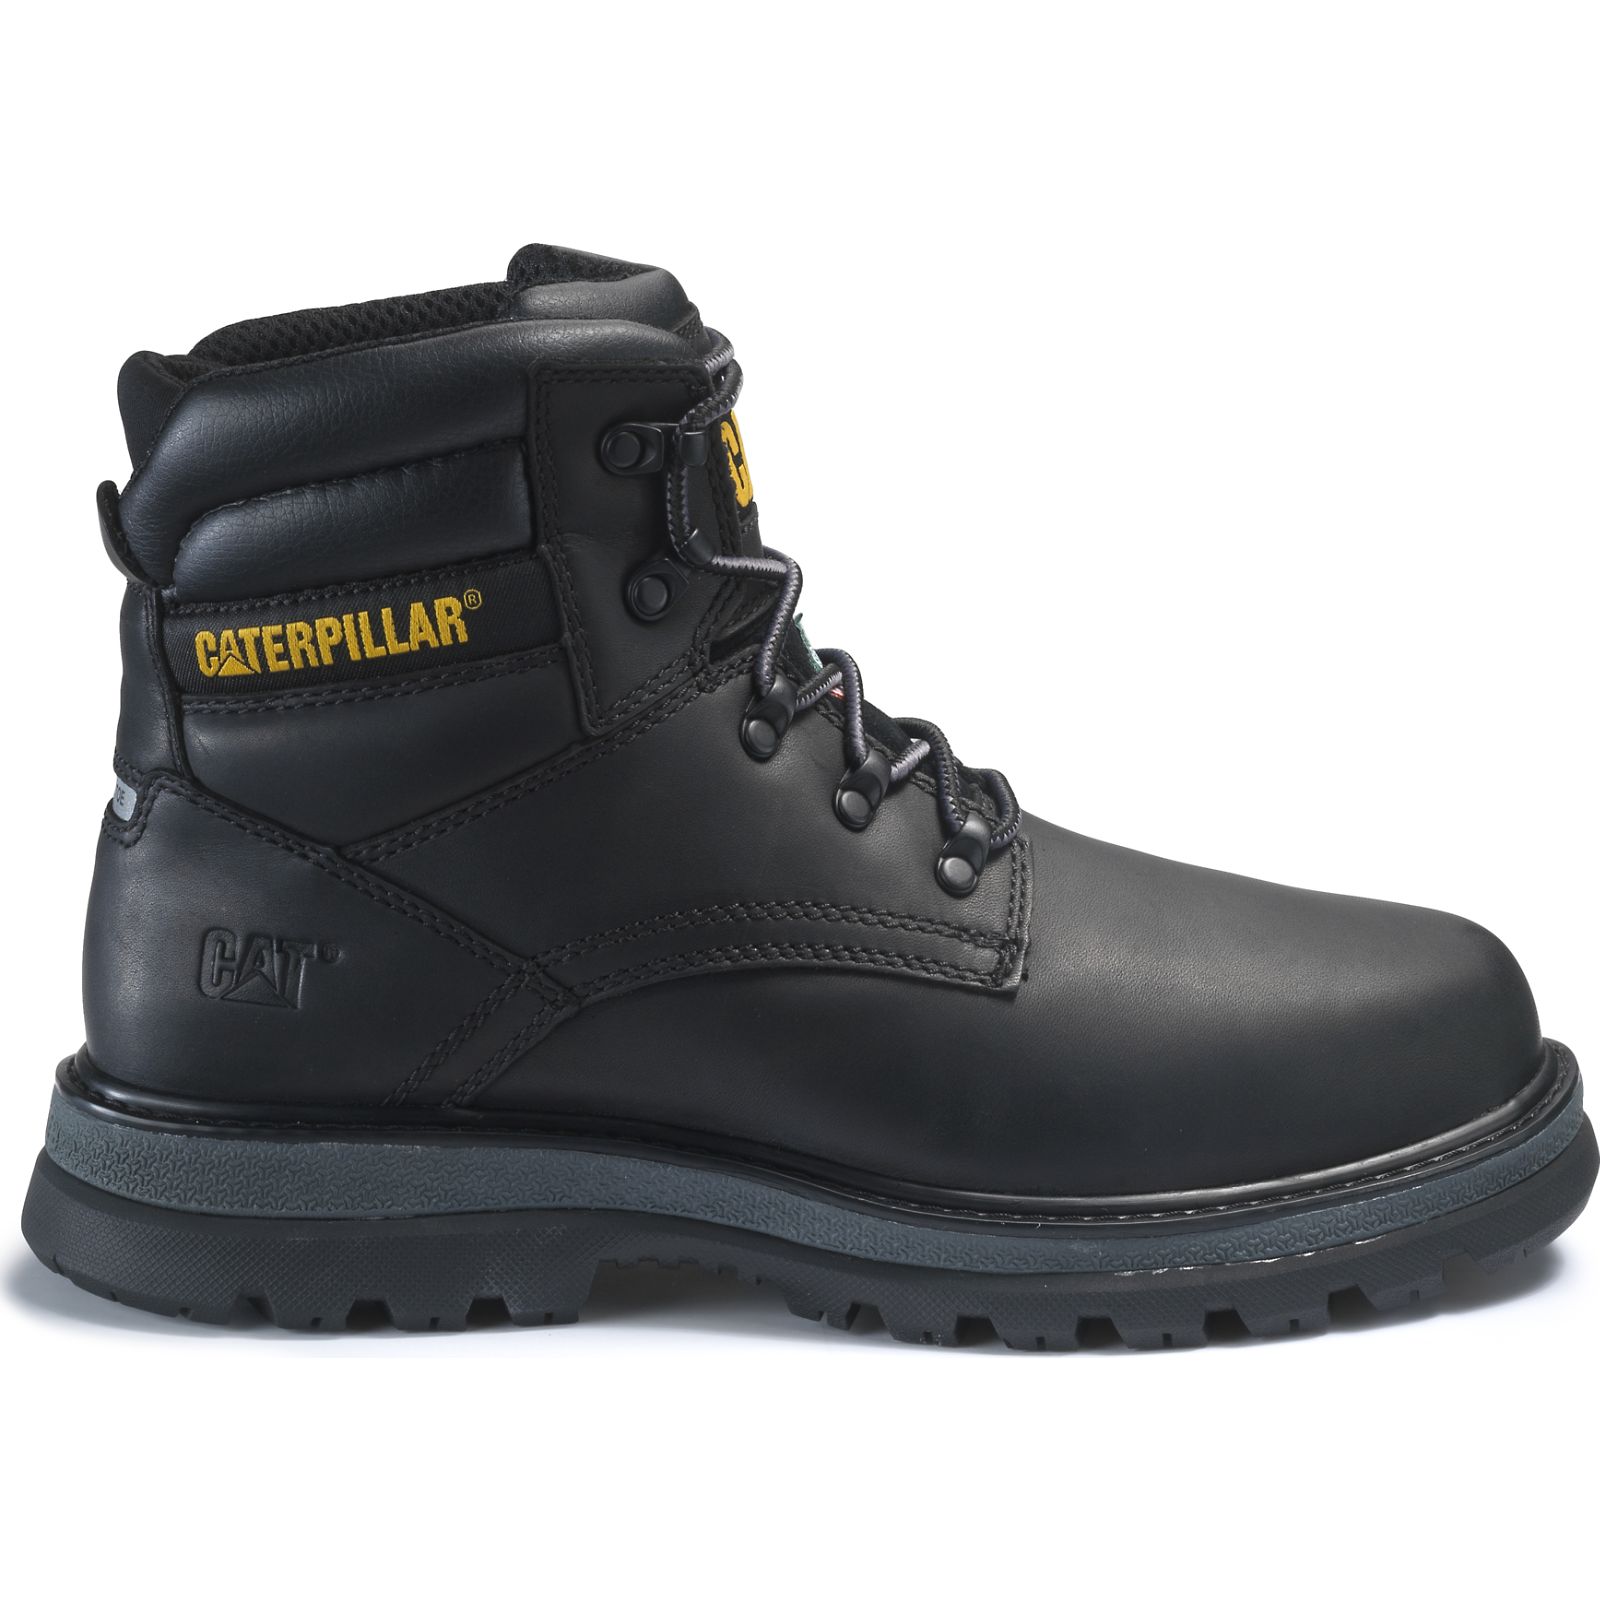 Caterpillar Fairbanks St Tx Csa Philippines - Mens Work Boots - Black 36274OEYX